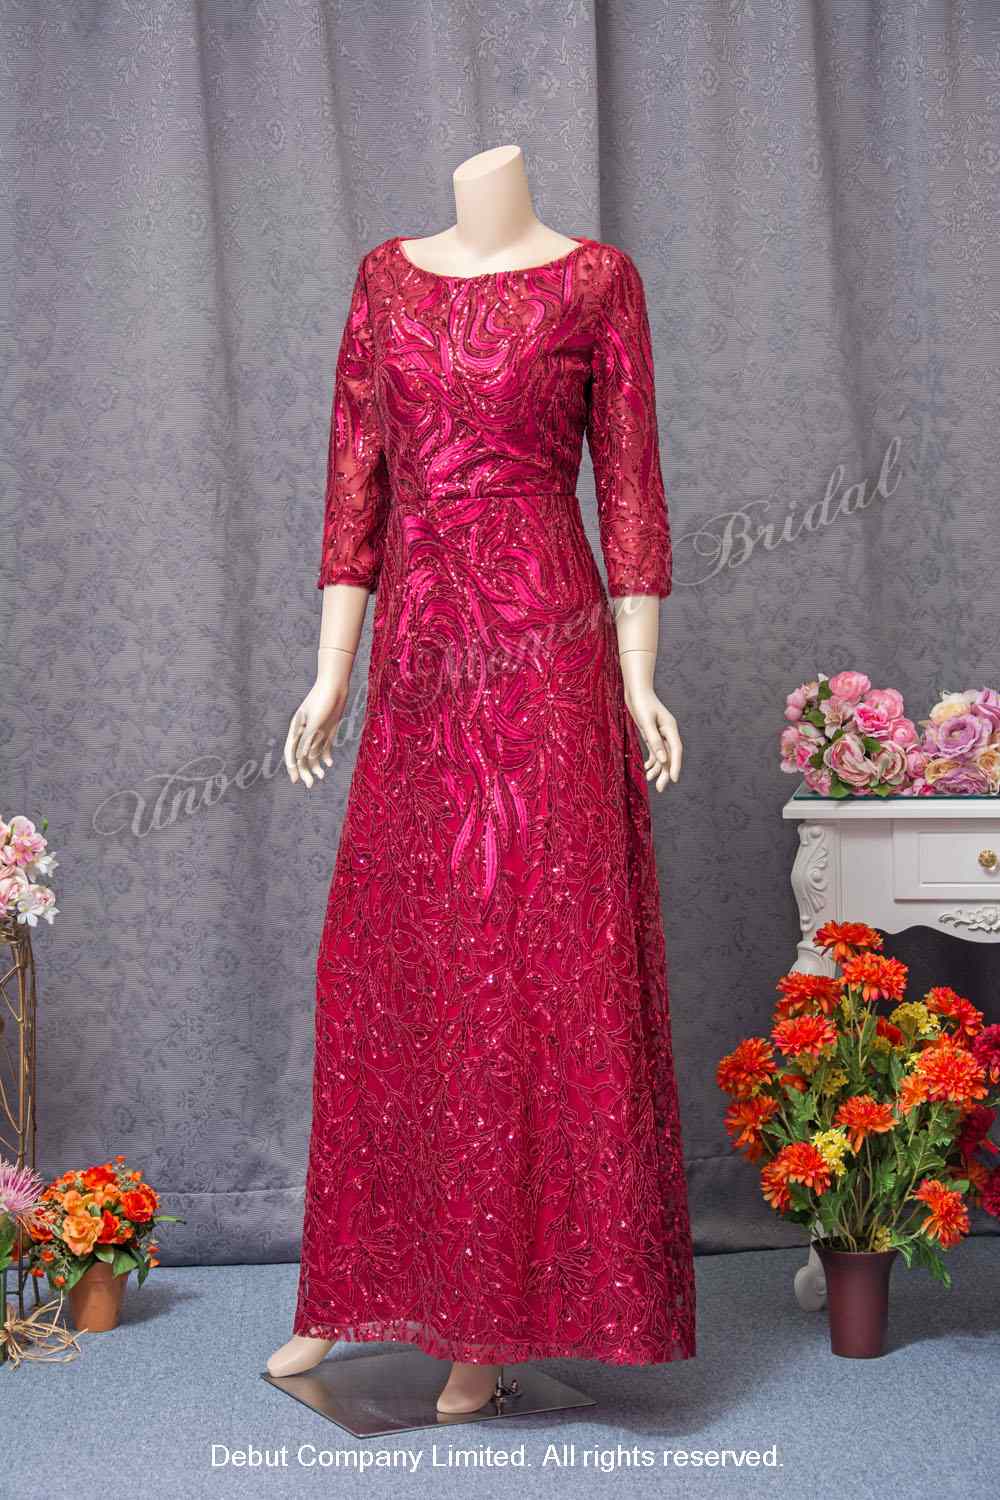 Long sleeves, round neckline, sequins embellishments, burgundy mother-of-the-bride dress 長袖, 圓領, 閃片, 酒紅色媽咪奶奶晩裝